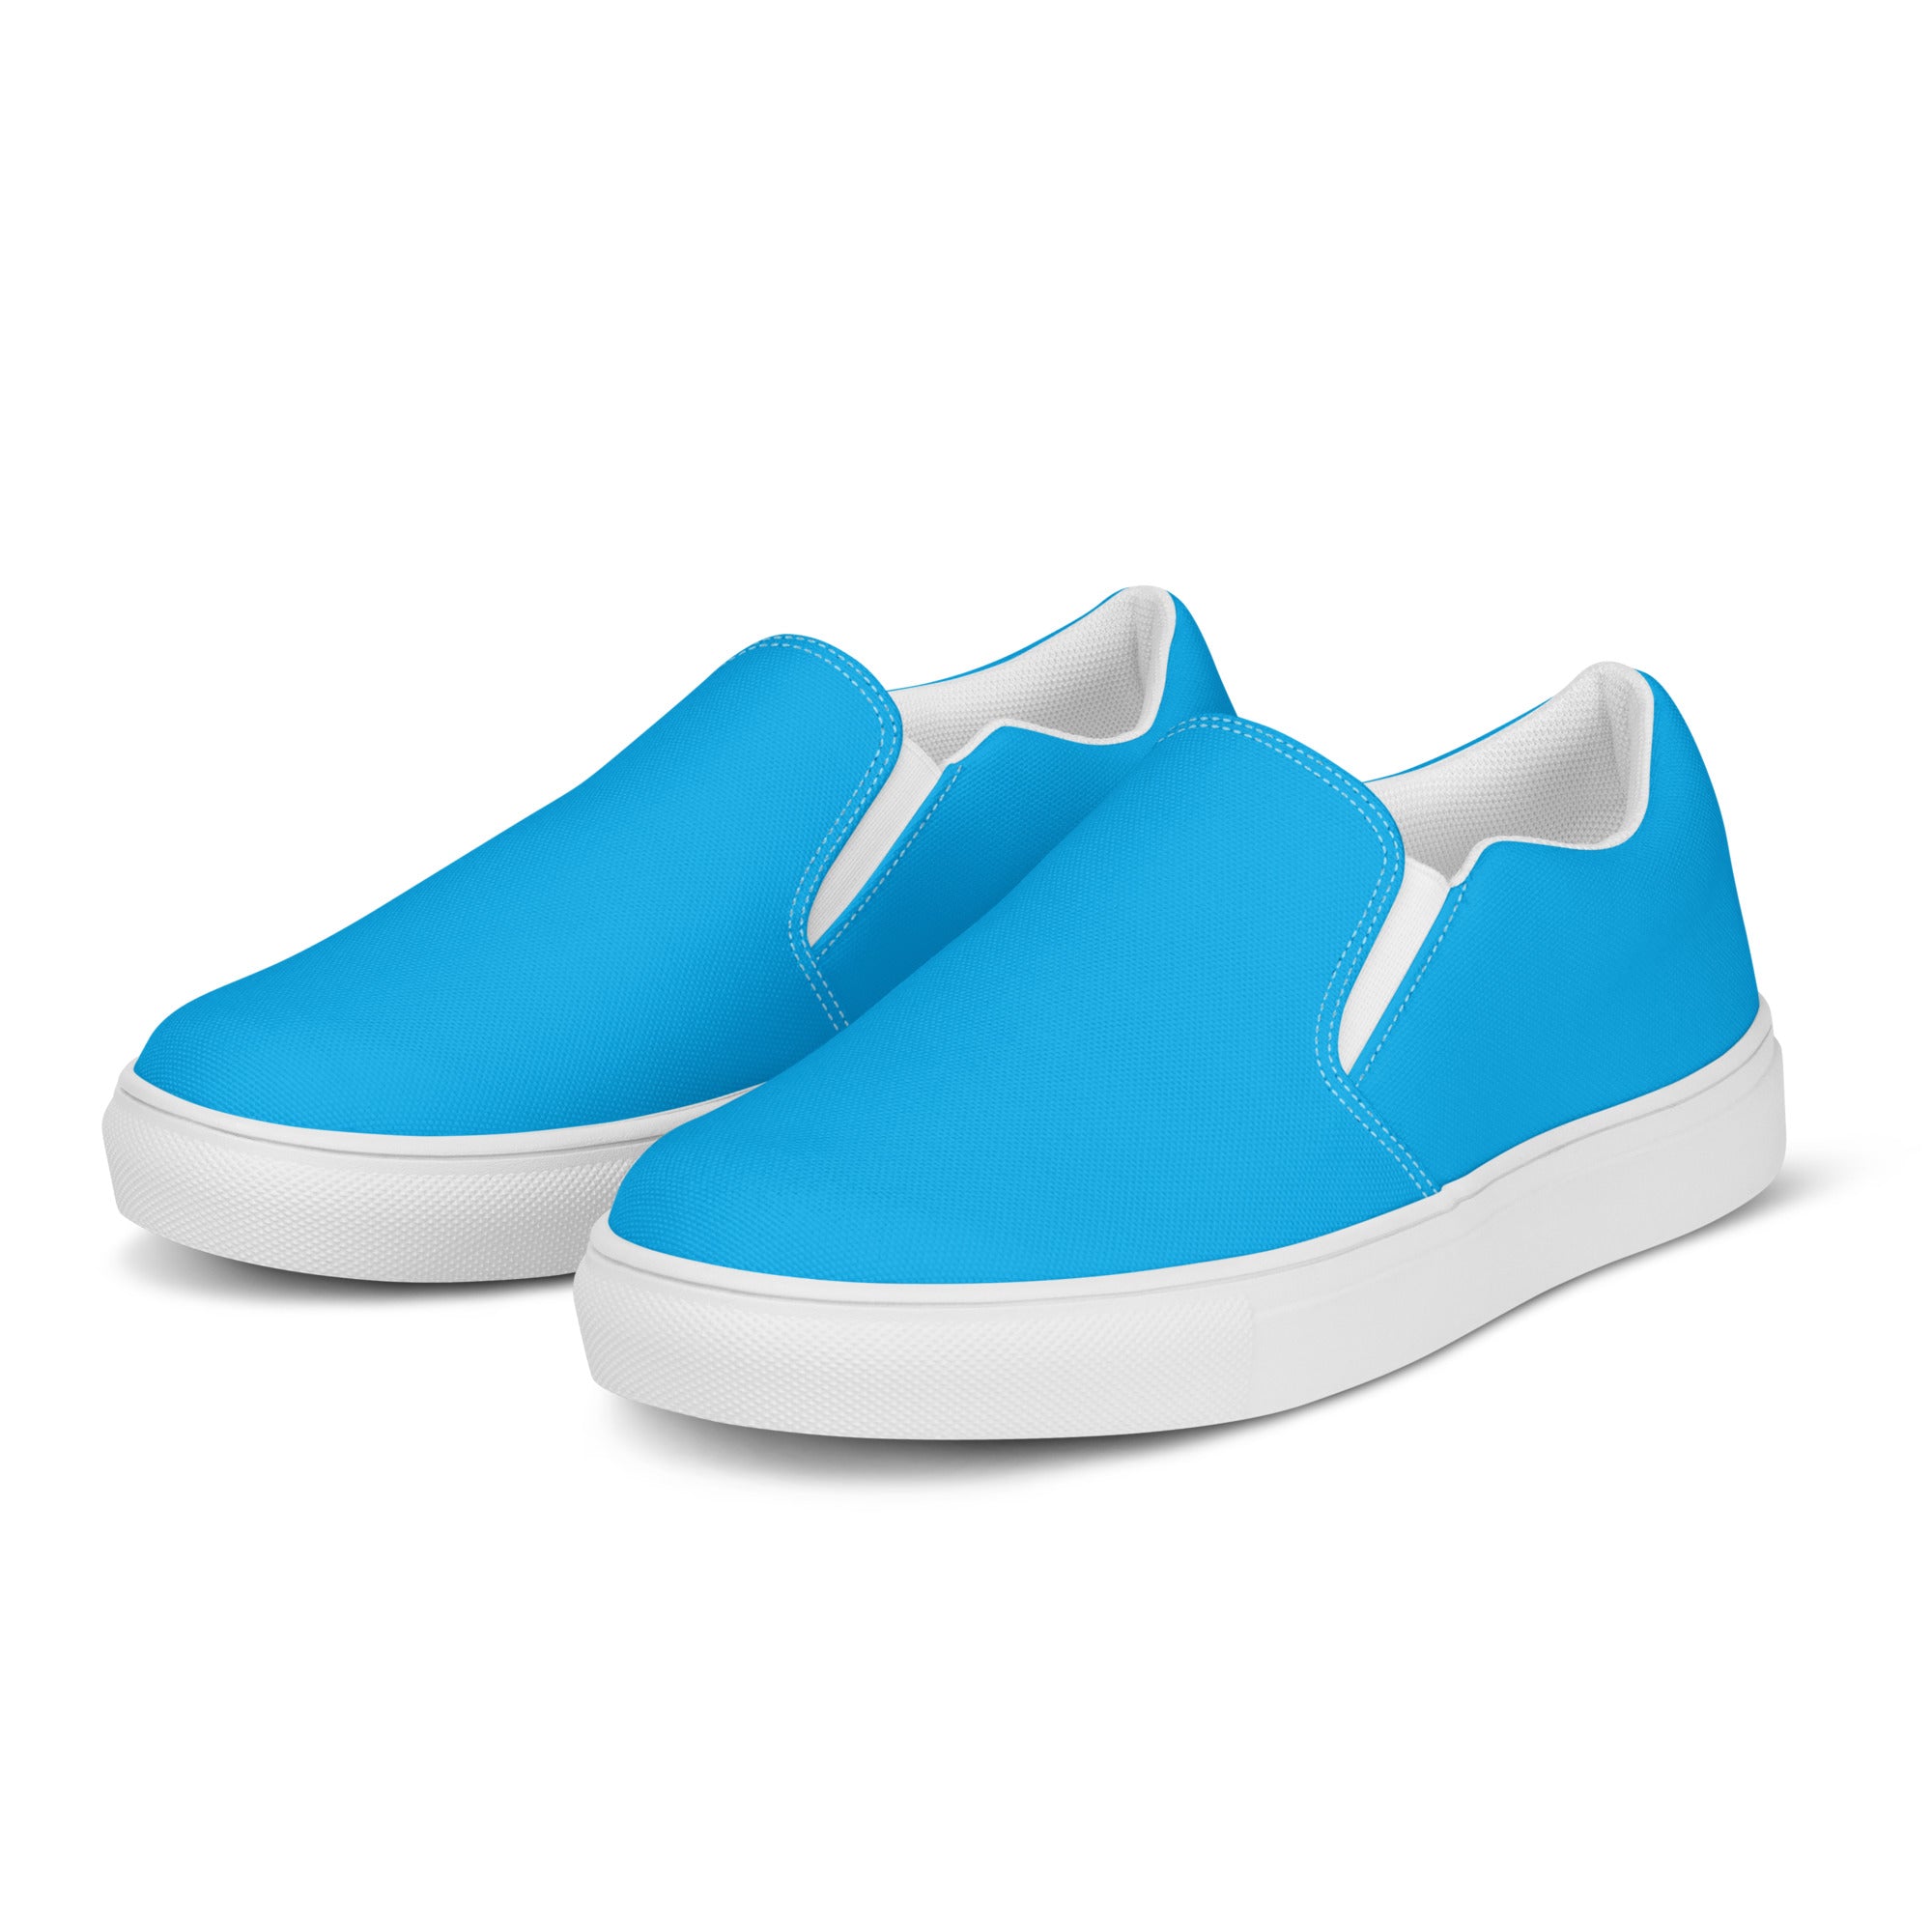 Rad Palm Blue Women’s Slip-On Canvas Shoes